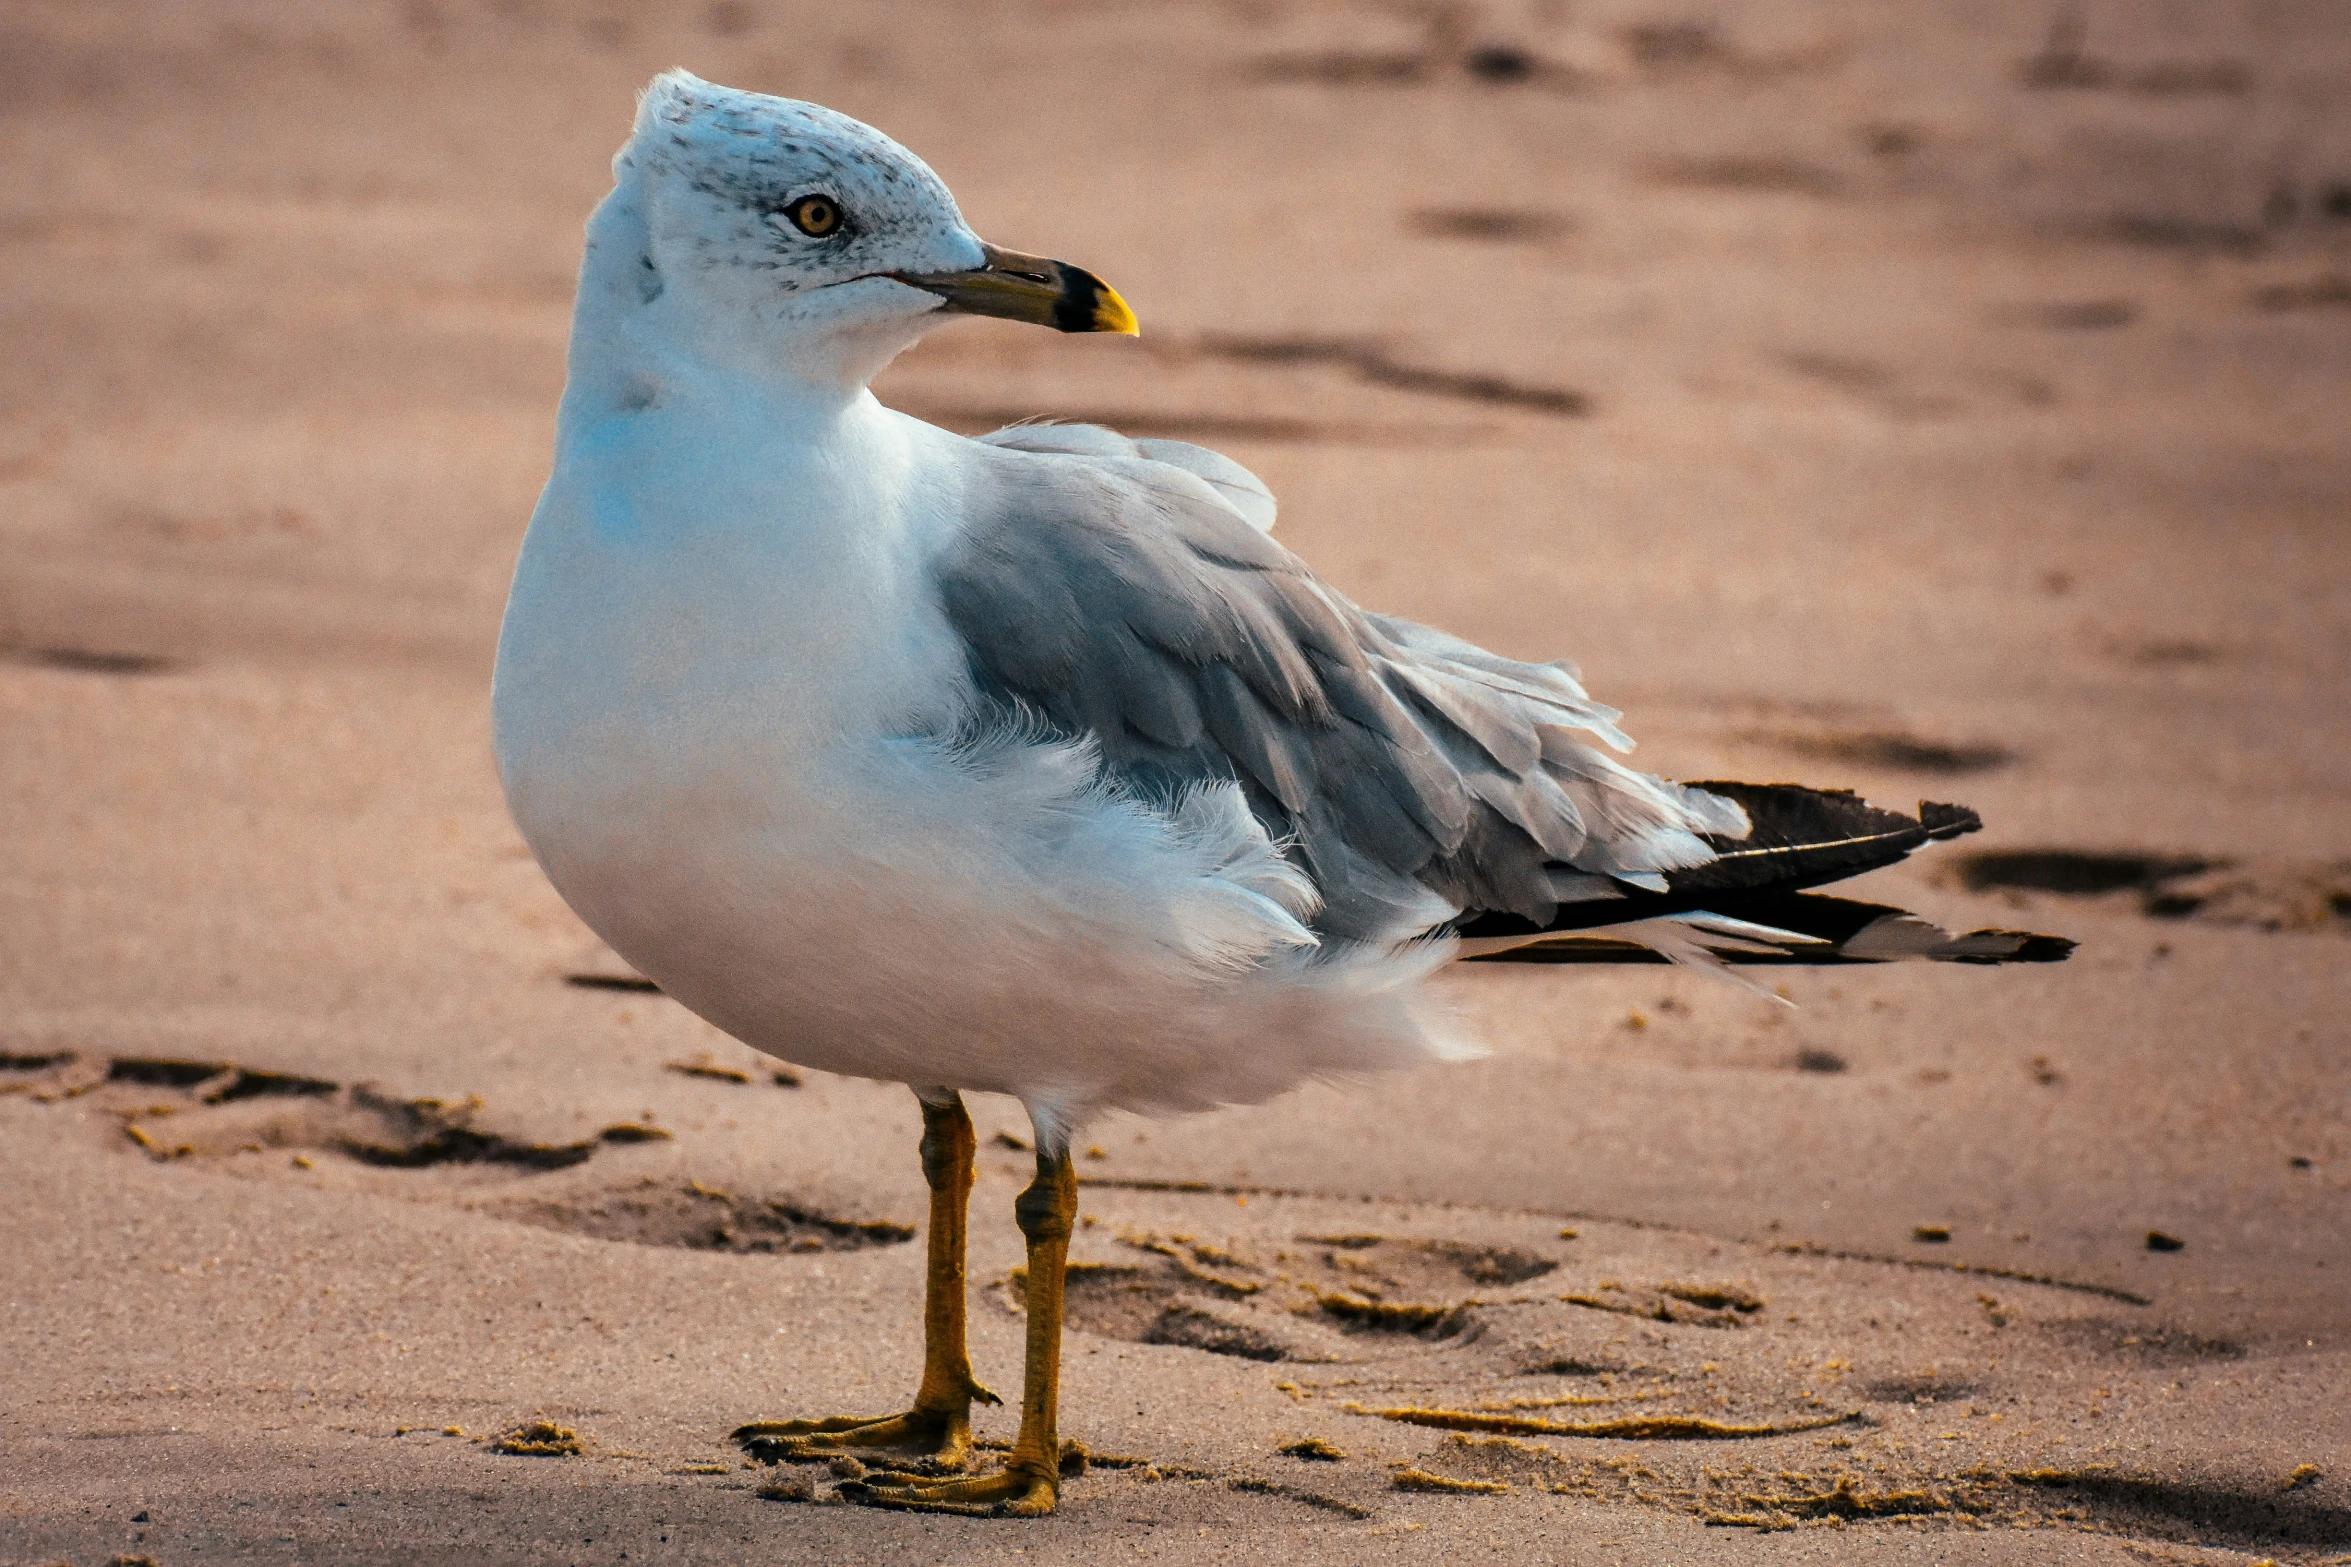 a bird is standing on a beach near the water